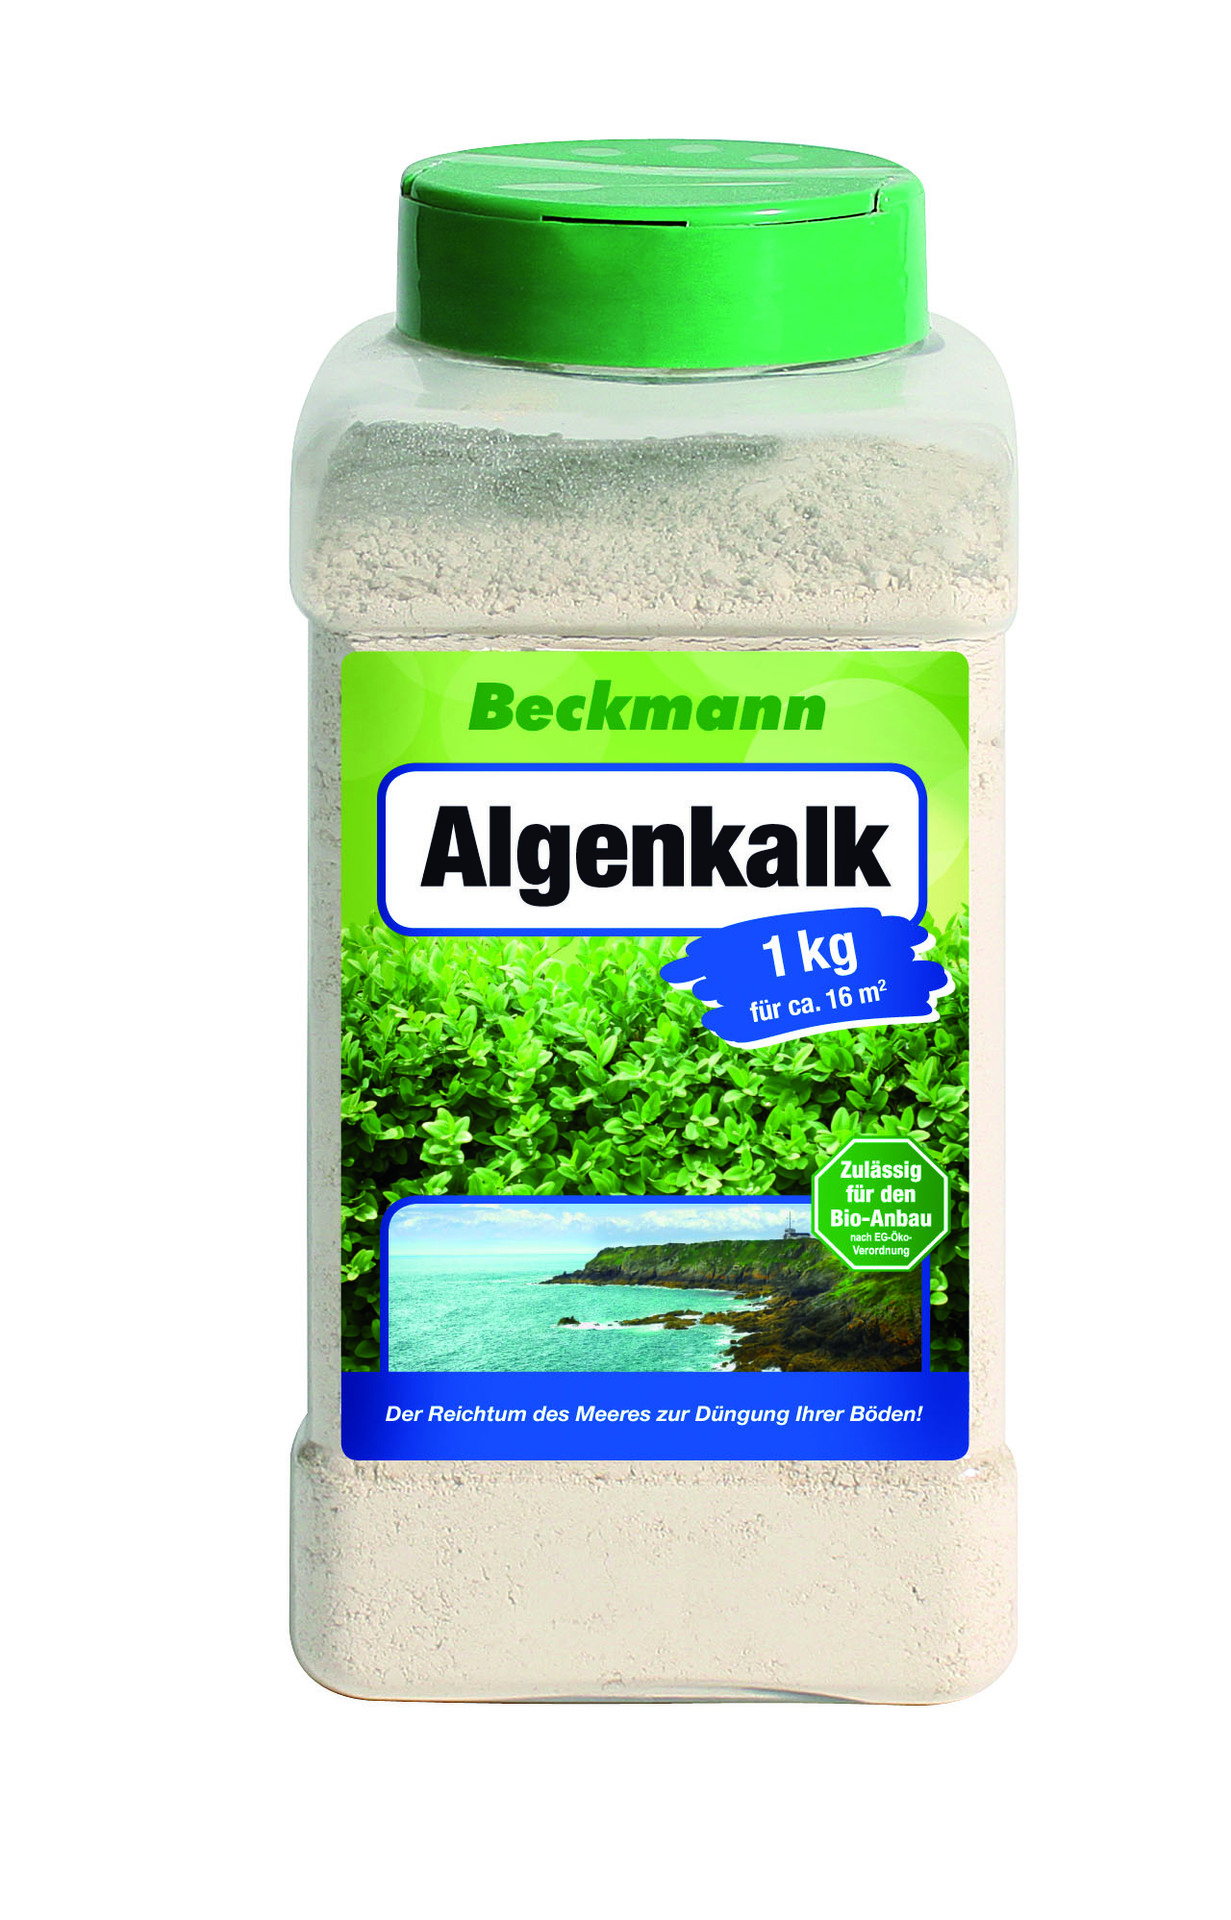 Beckmann & Brehm GmbH Algenkalk 1kg Dose